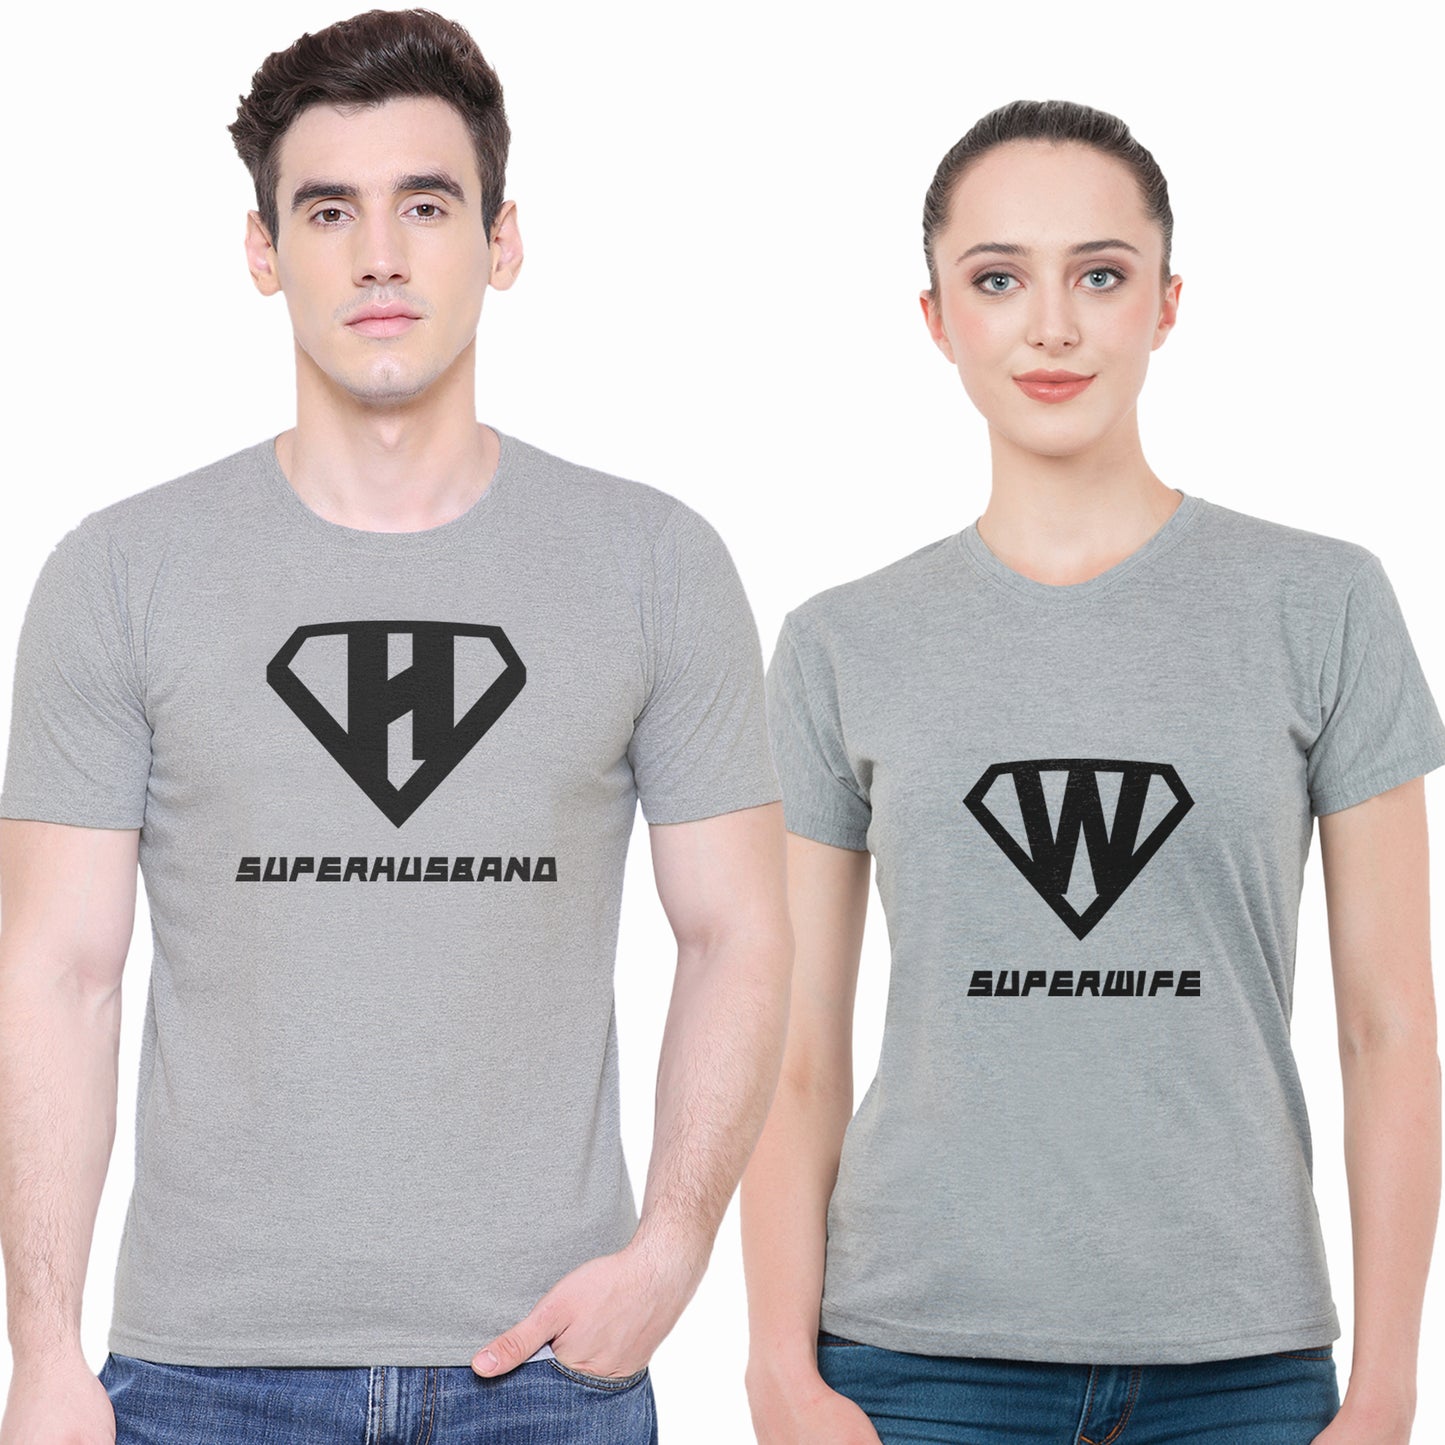 Super Husband & Wife matching Couple T shirts- Grey